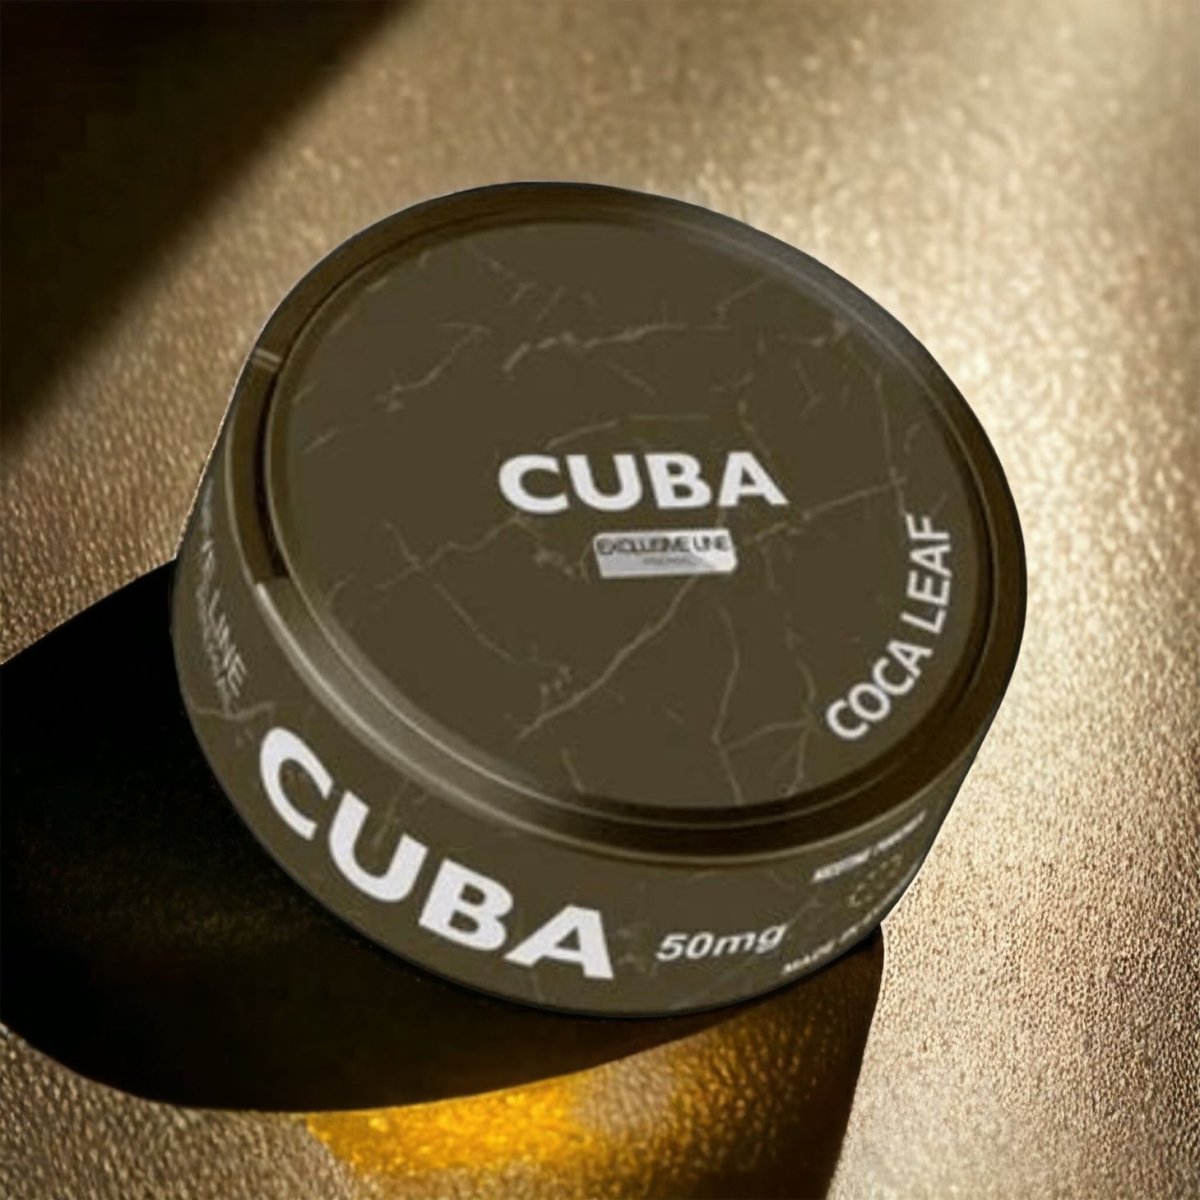 Cuba - Cuba Nicopods - 15% - Box of 10 - theno1plugshop